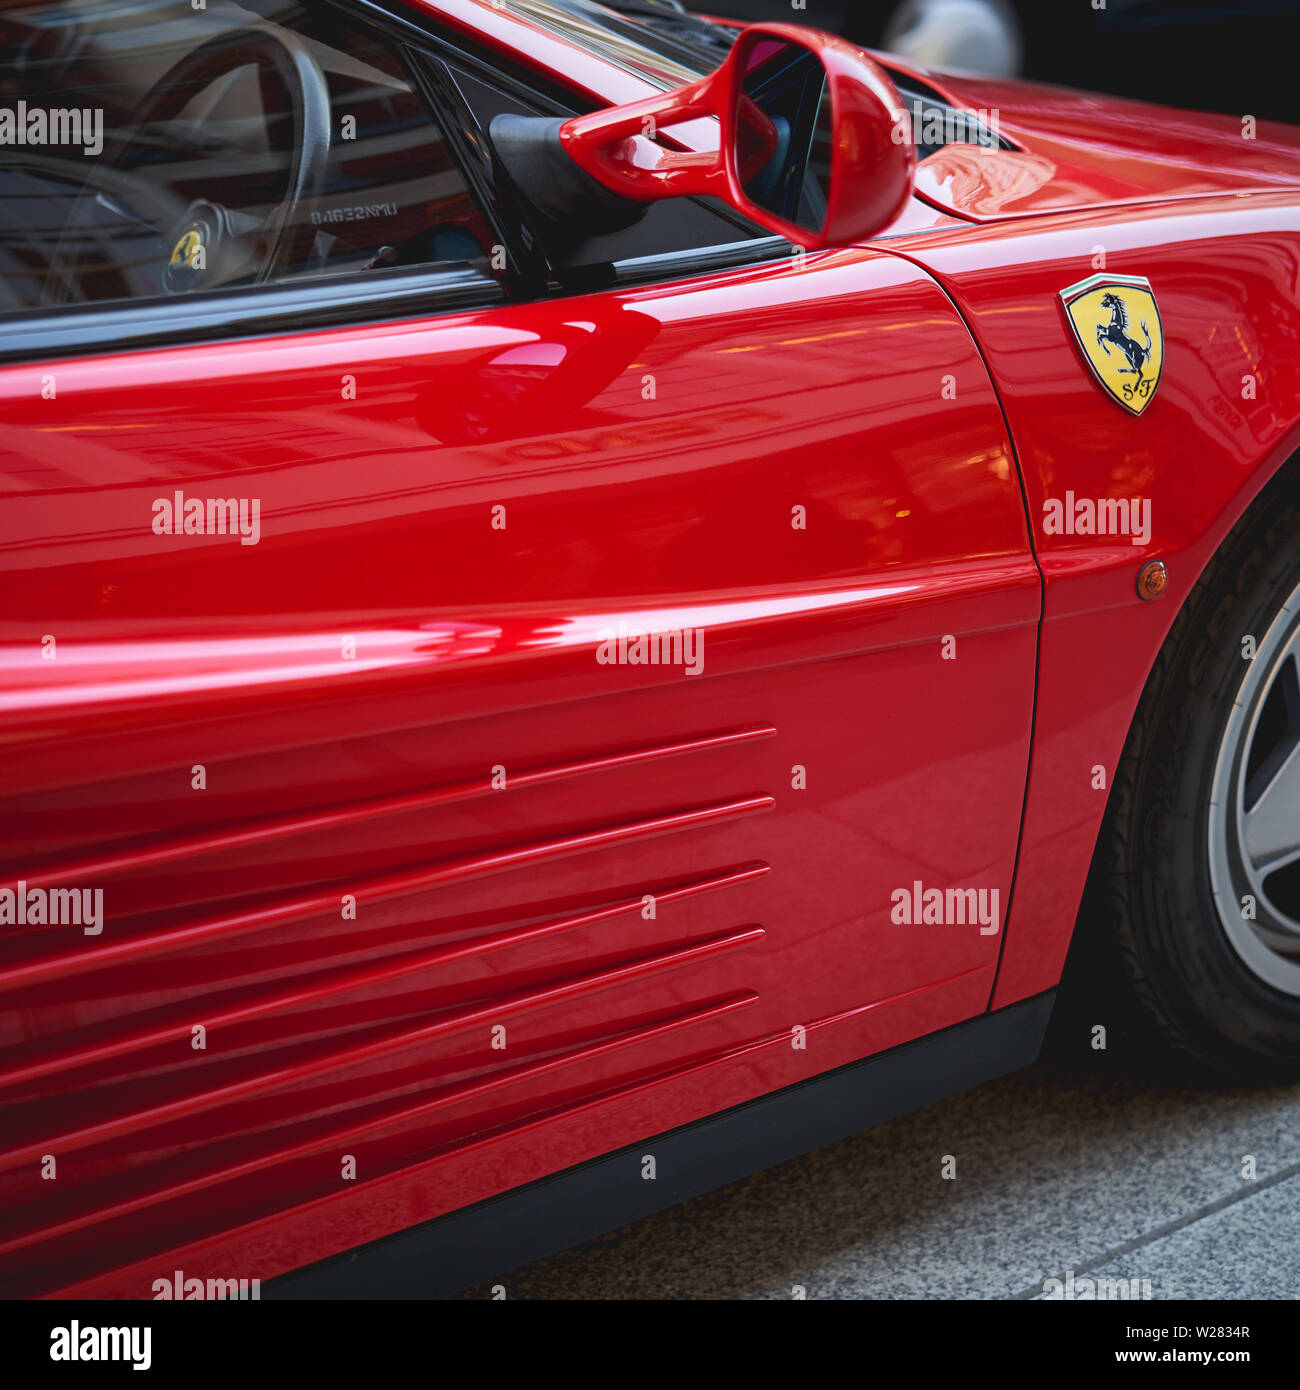 London, UK - June, 2019. Detail of a vintage red Ferrari Testarossa parked along Bond Street, the luxury retail street in central London. Stock Photo